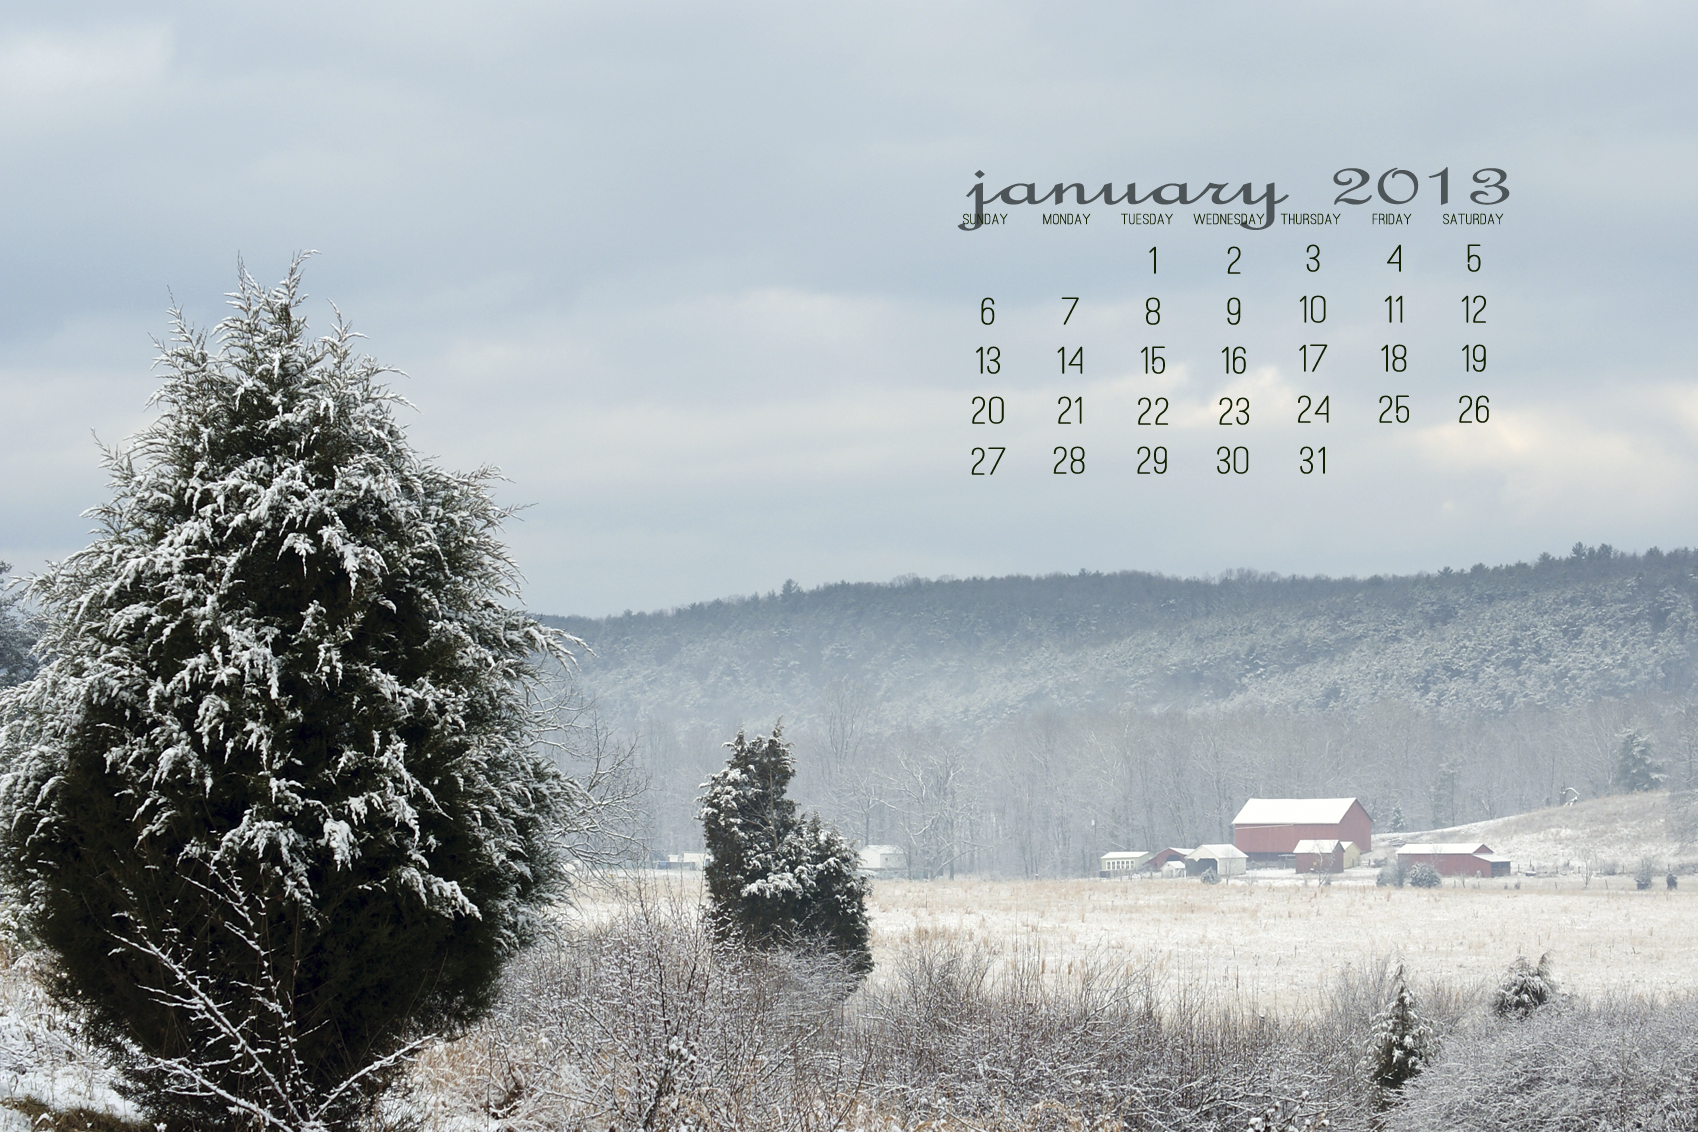 January Calendar Wallpapers January Wallpaper With Calendar